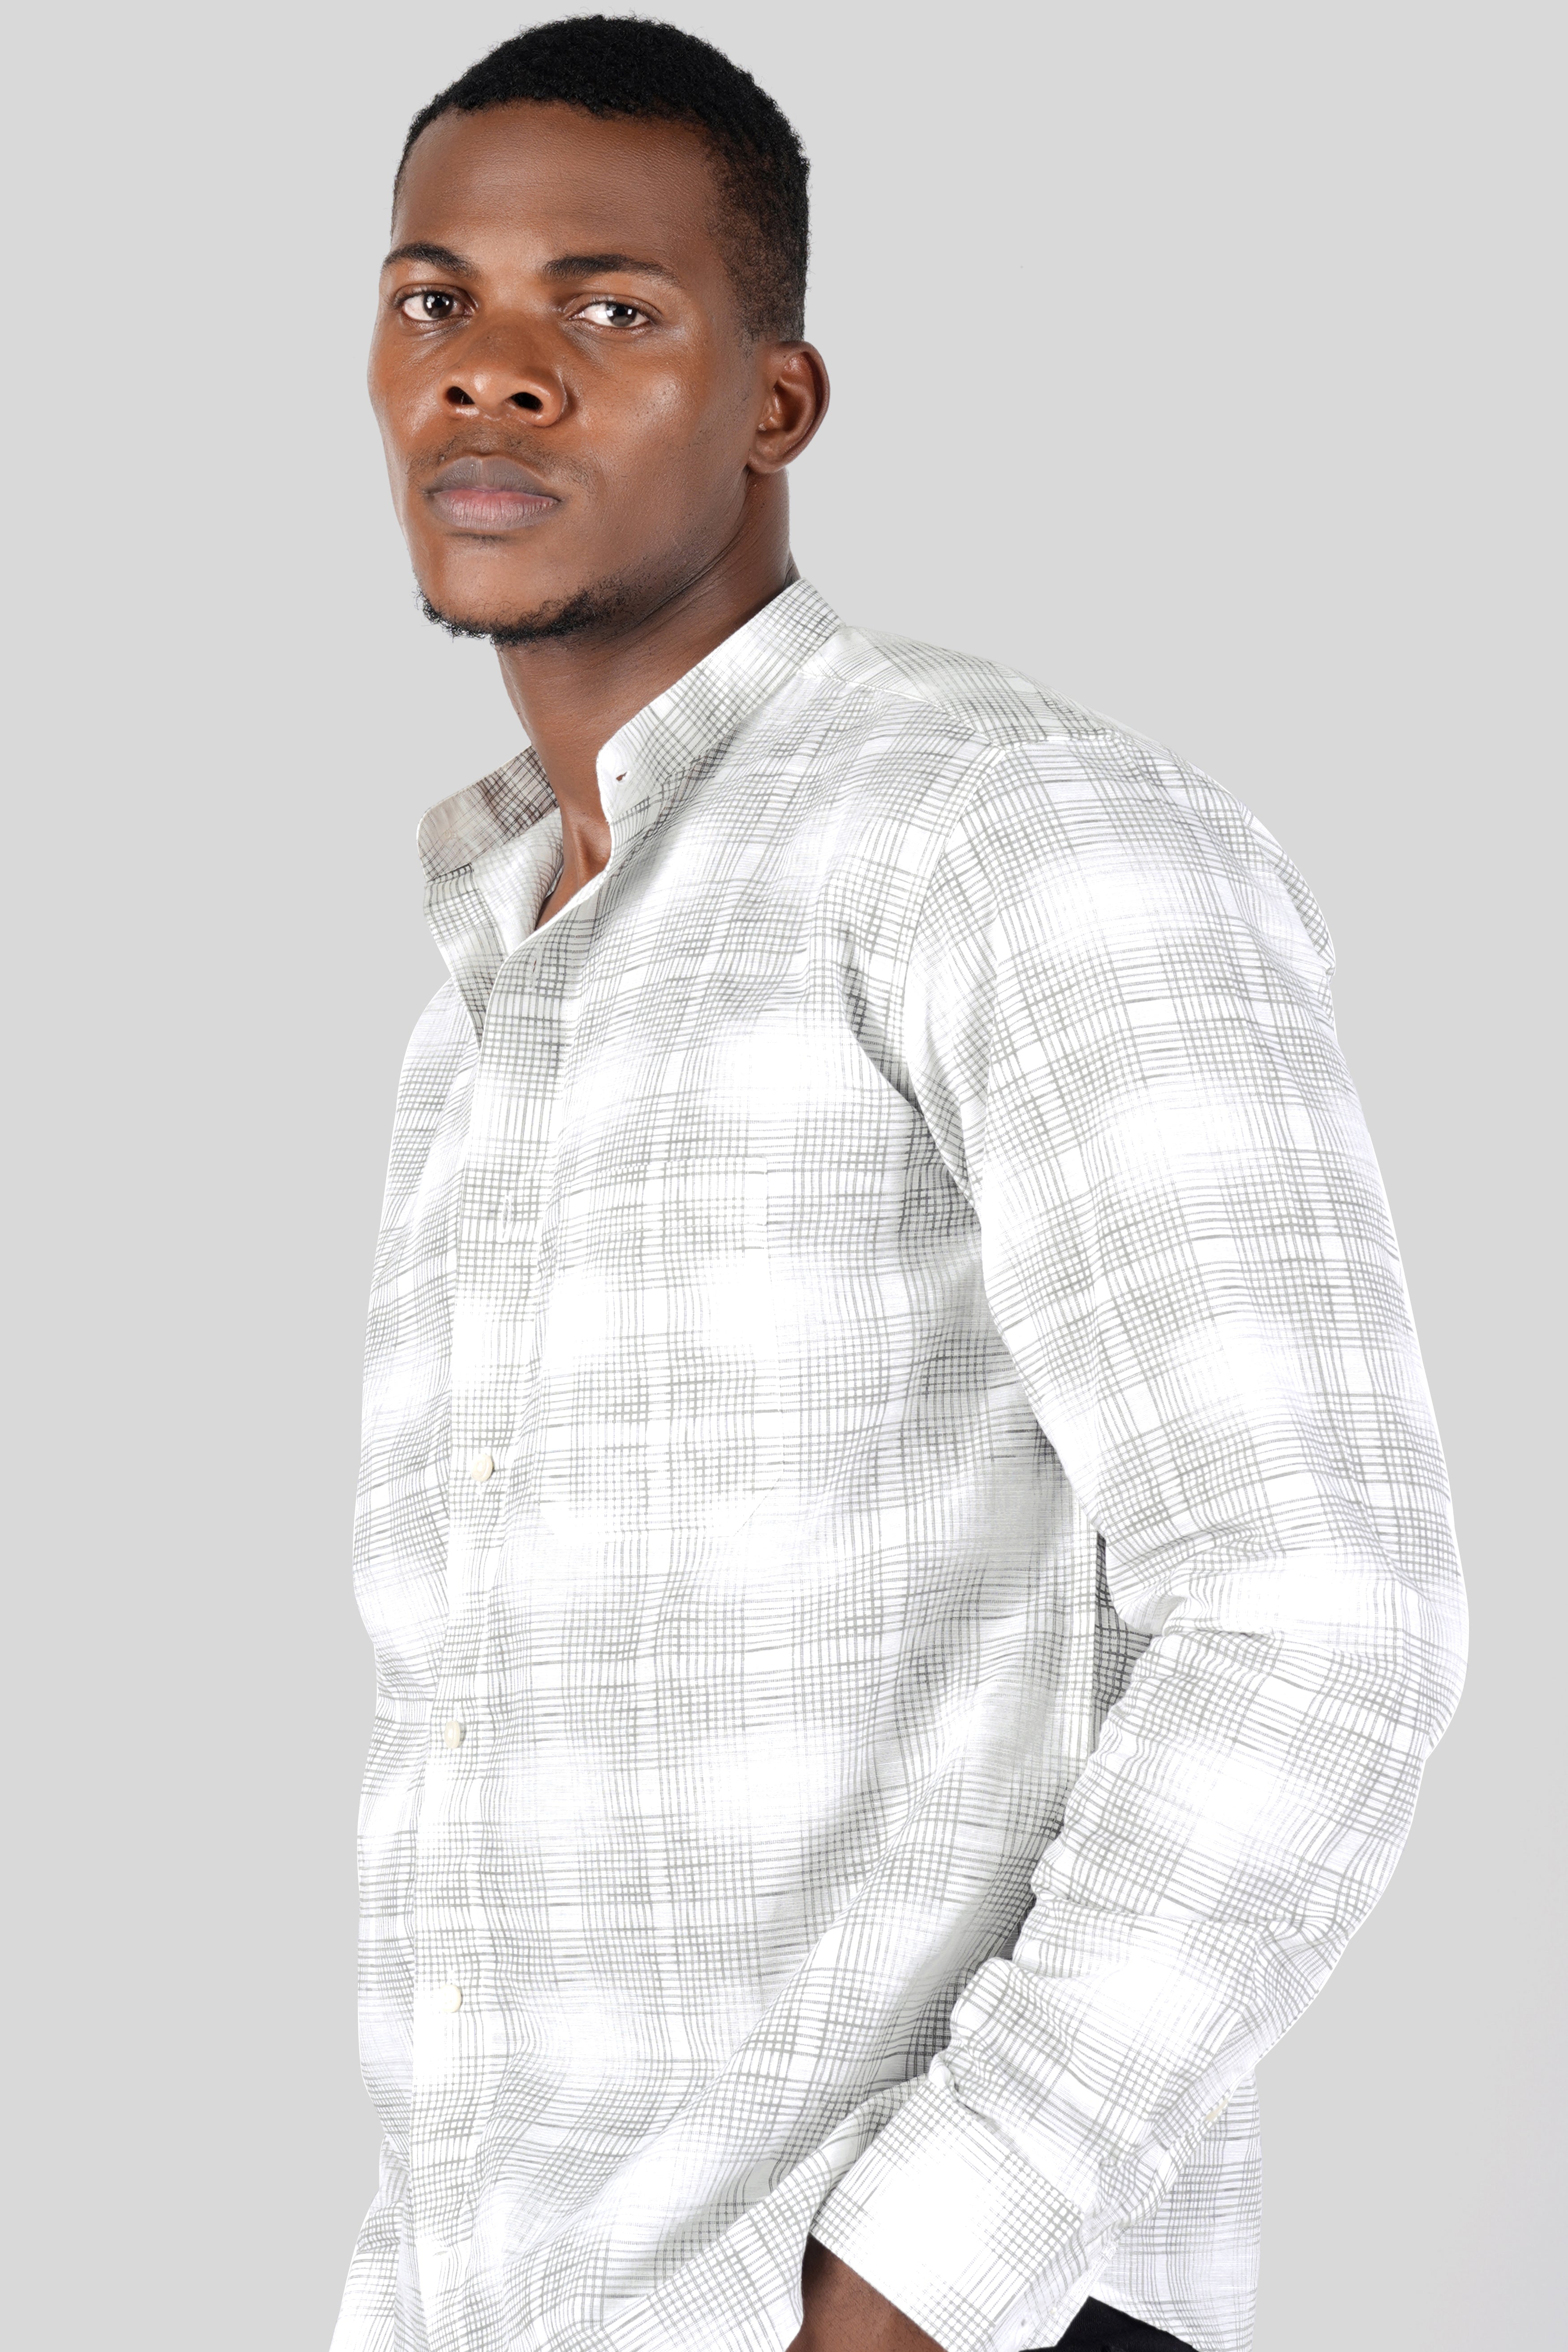 Nobel Gray and White Checkered Luxurious Linen Shirt